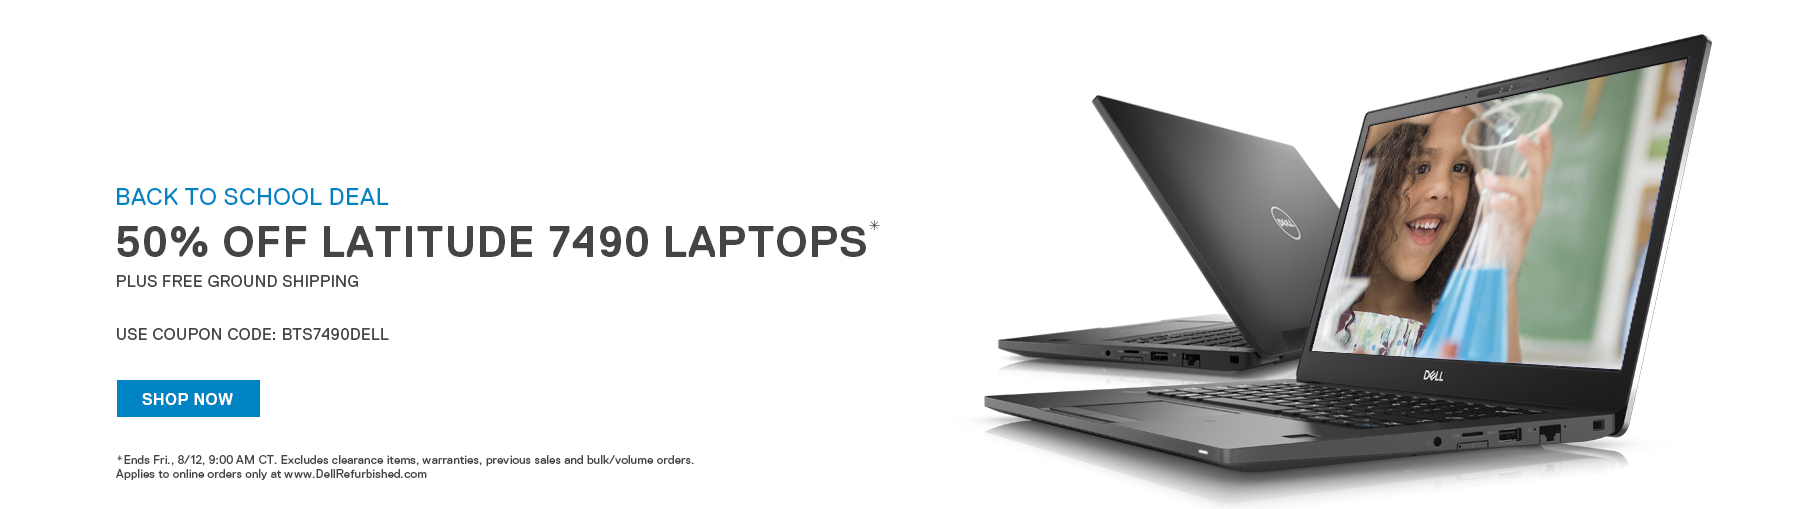 Dell Back to School Latitude 7490 Laptop Sale